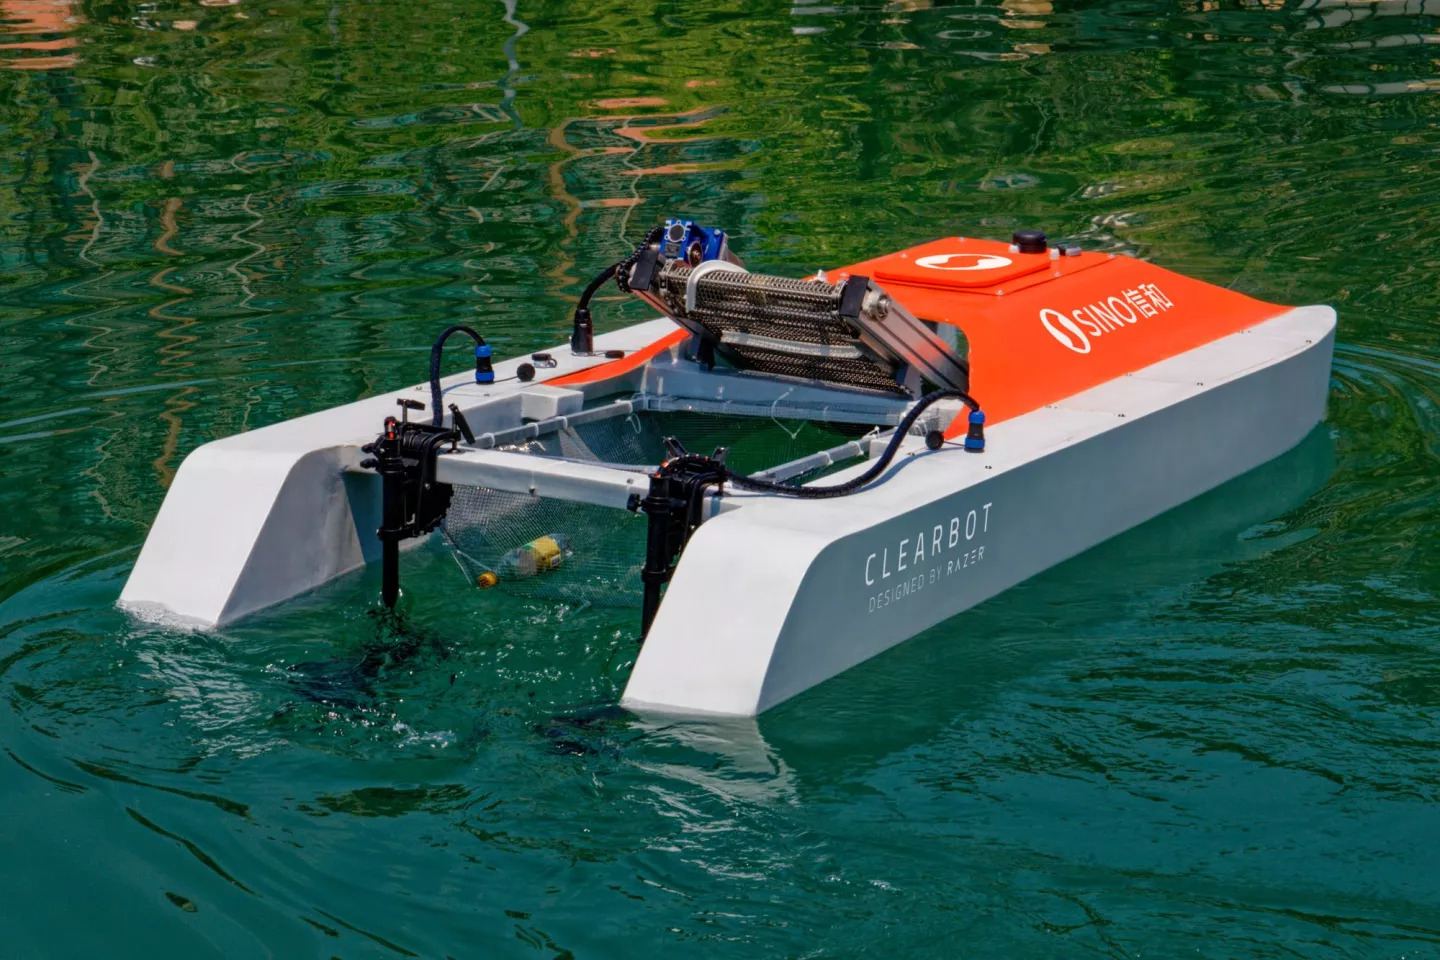 Clearbot Neo長3米、寬1.3米，由太陽能動力驅動，目前在香港水域運作。（Open Ocean Engineering網上圖片）